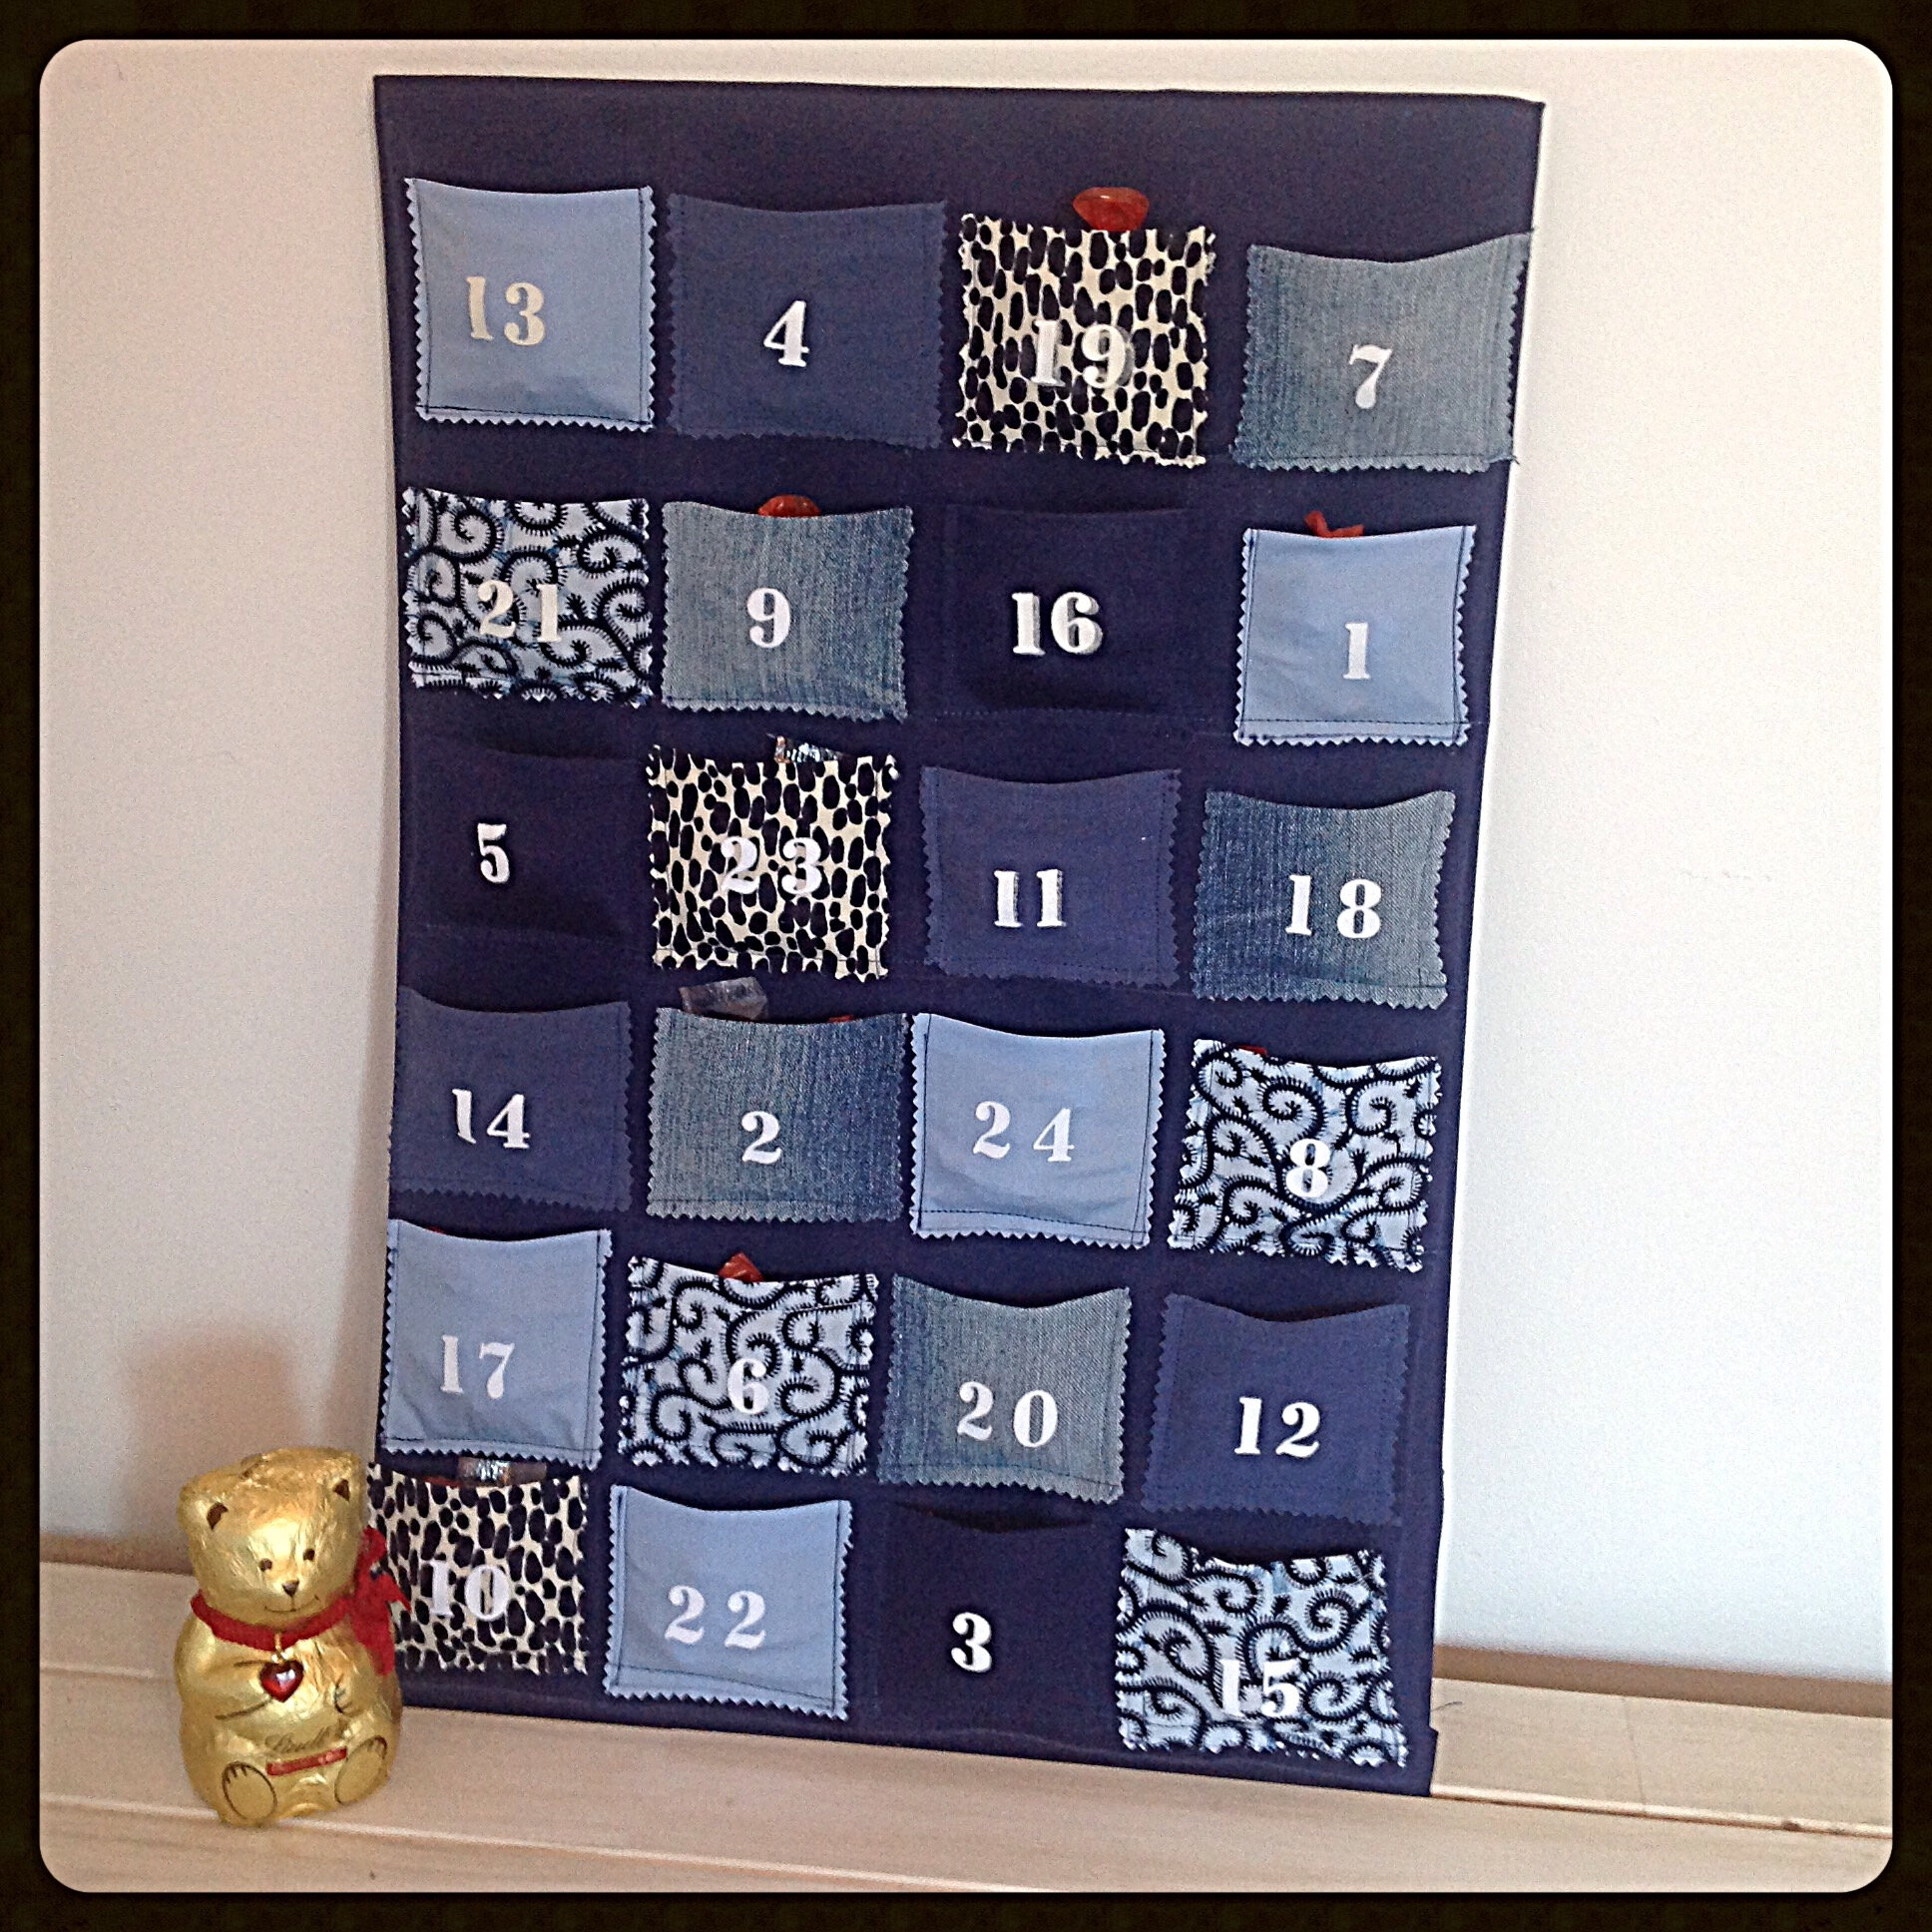 Tuto : Fabriquer un calendrier de l'Avent avec des sacs en tissu